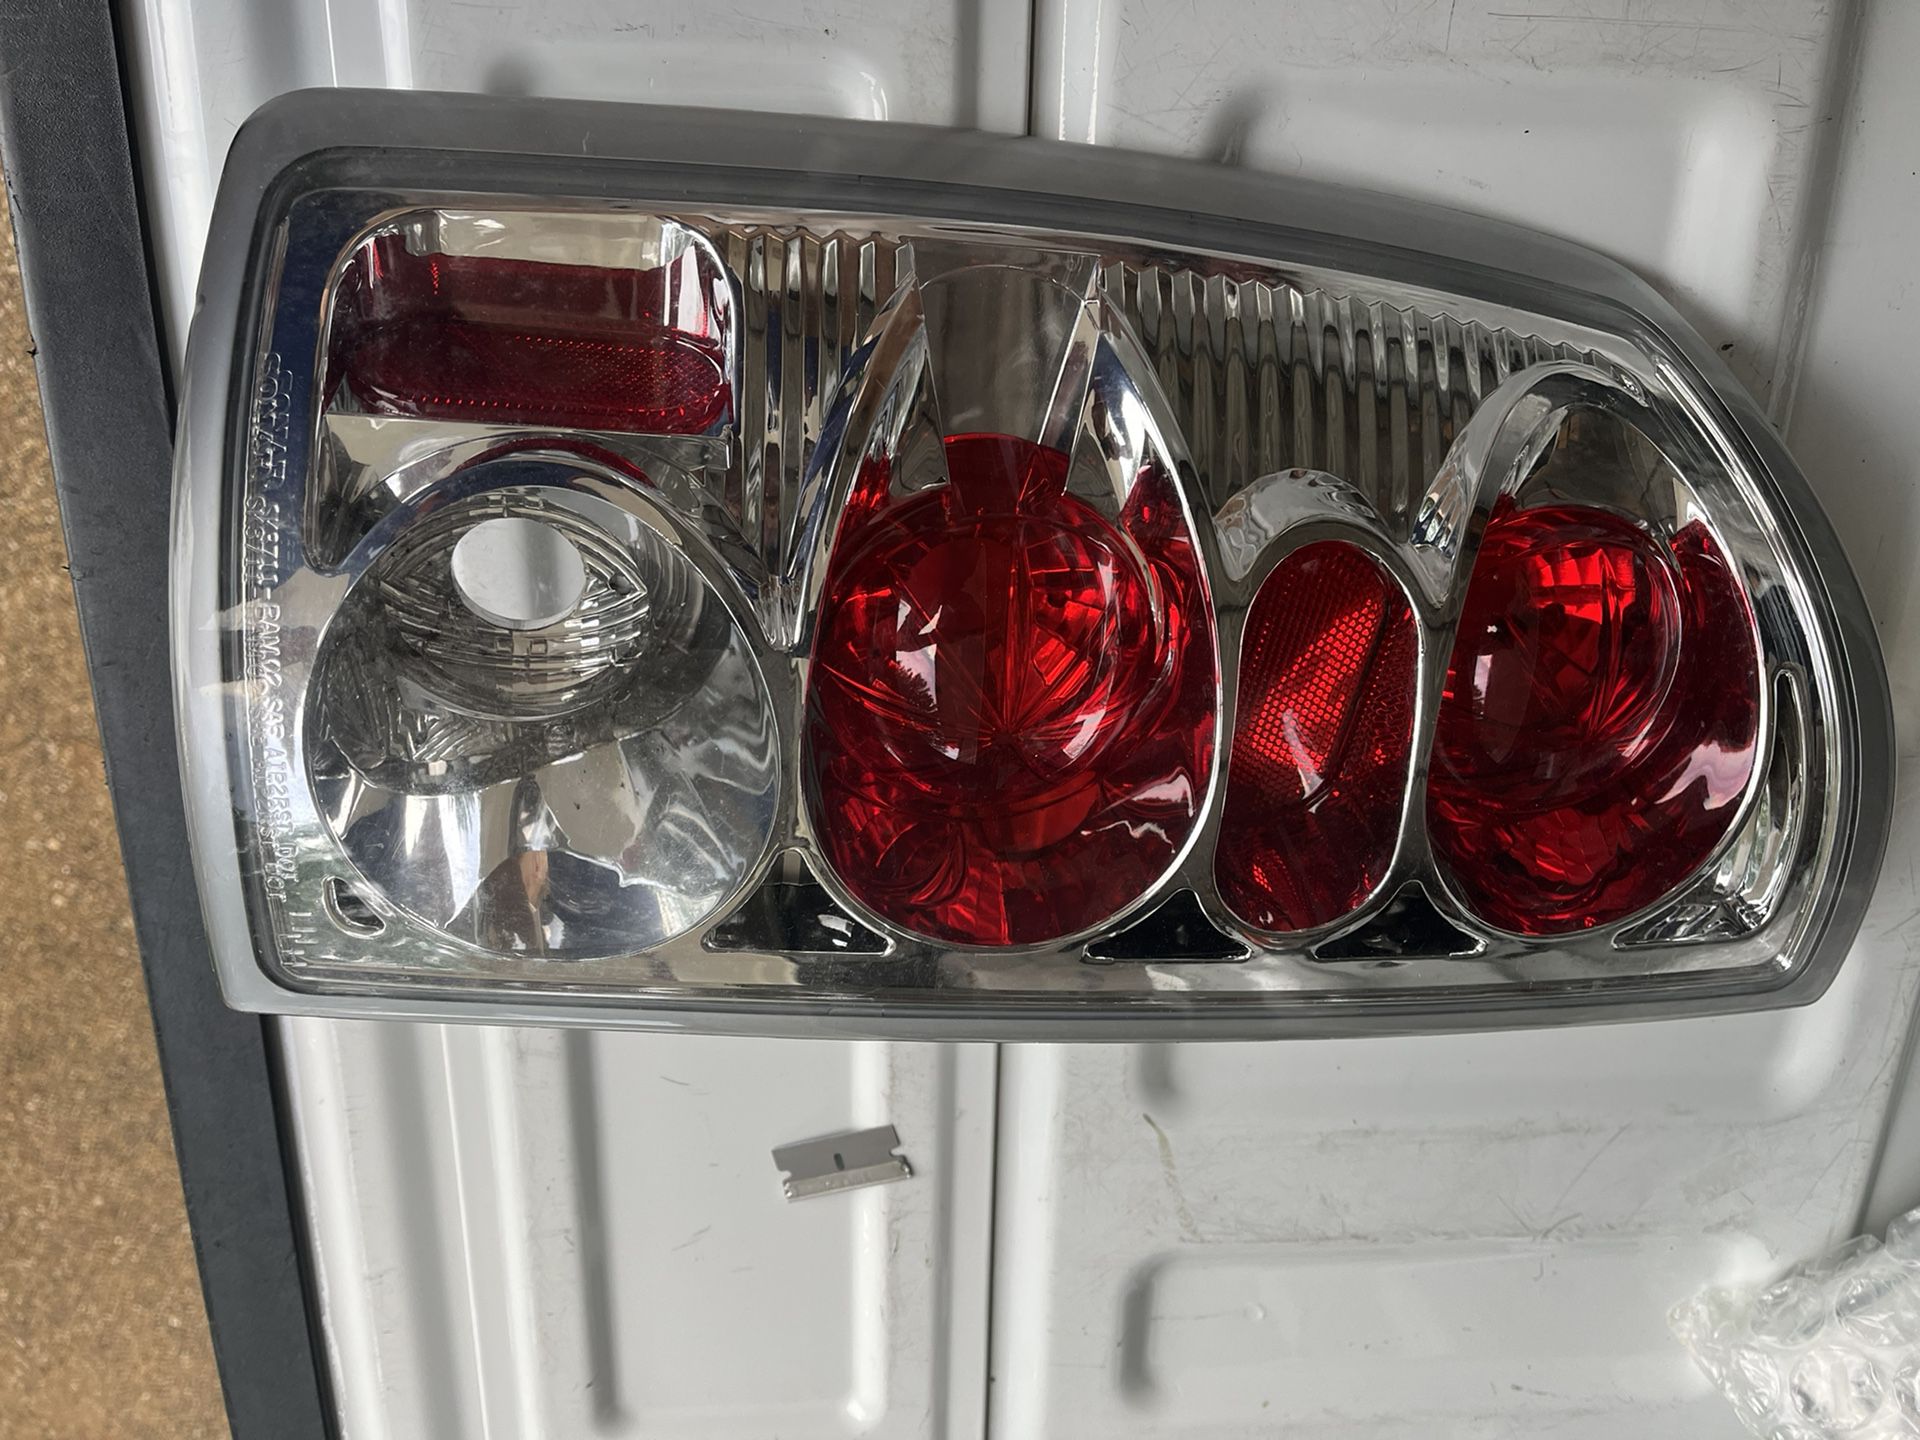 02+05 Dodge Ram Rear Lights 